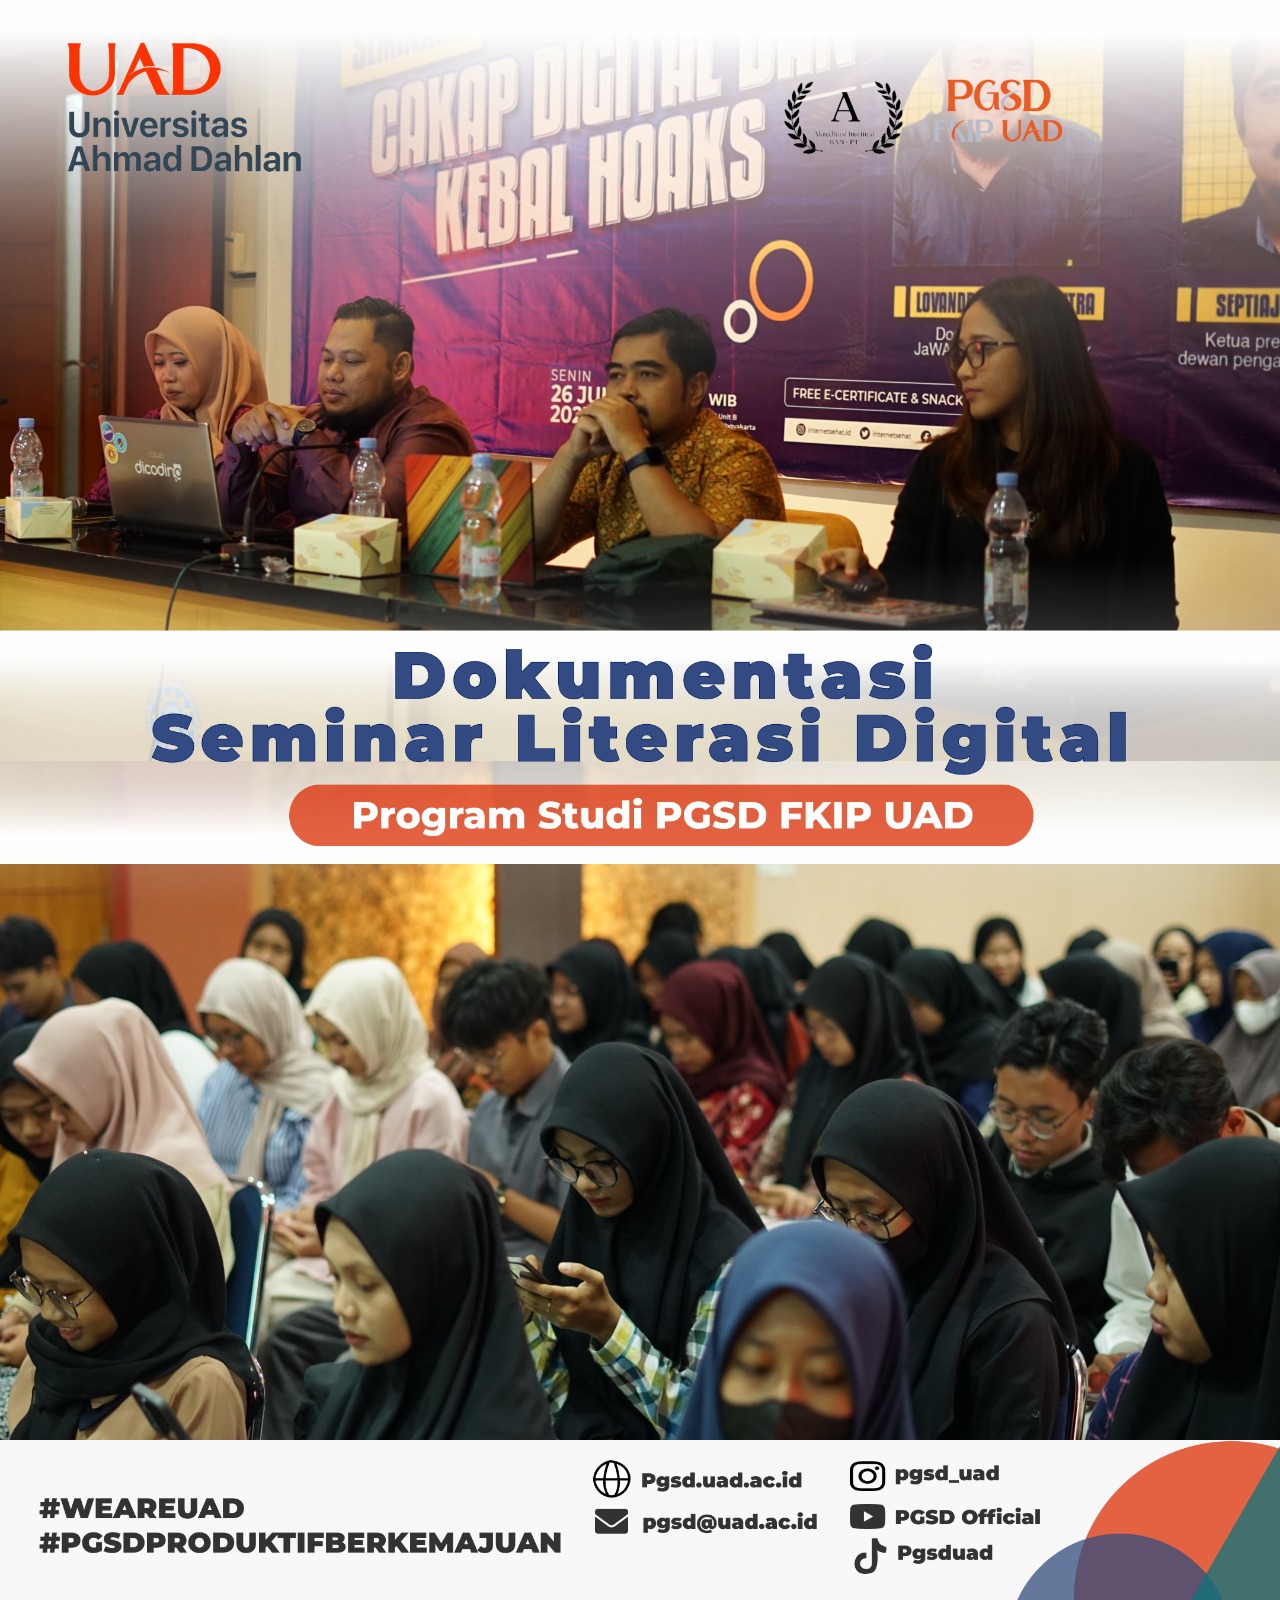 Seminar Literasi Digital "Cakap Digital dan Kebal Hoaks"